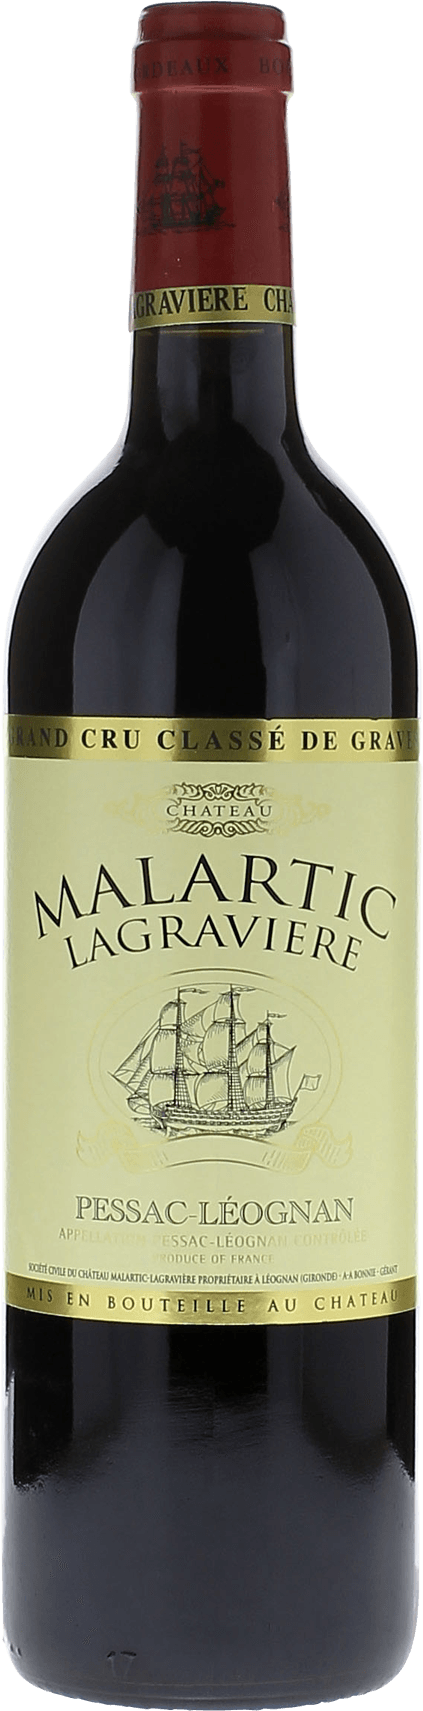 Malartic lagraviere rouge 1975 Grand Cru Class Graves, Bordeaux rouge